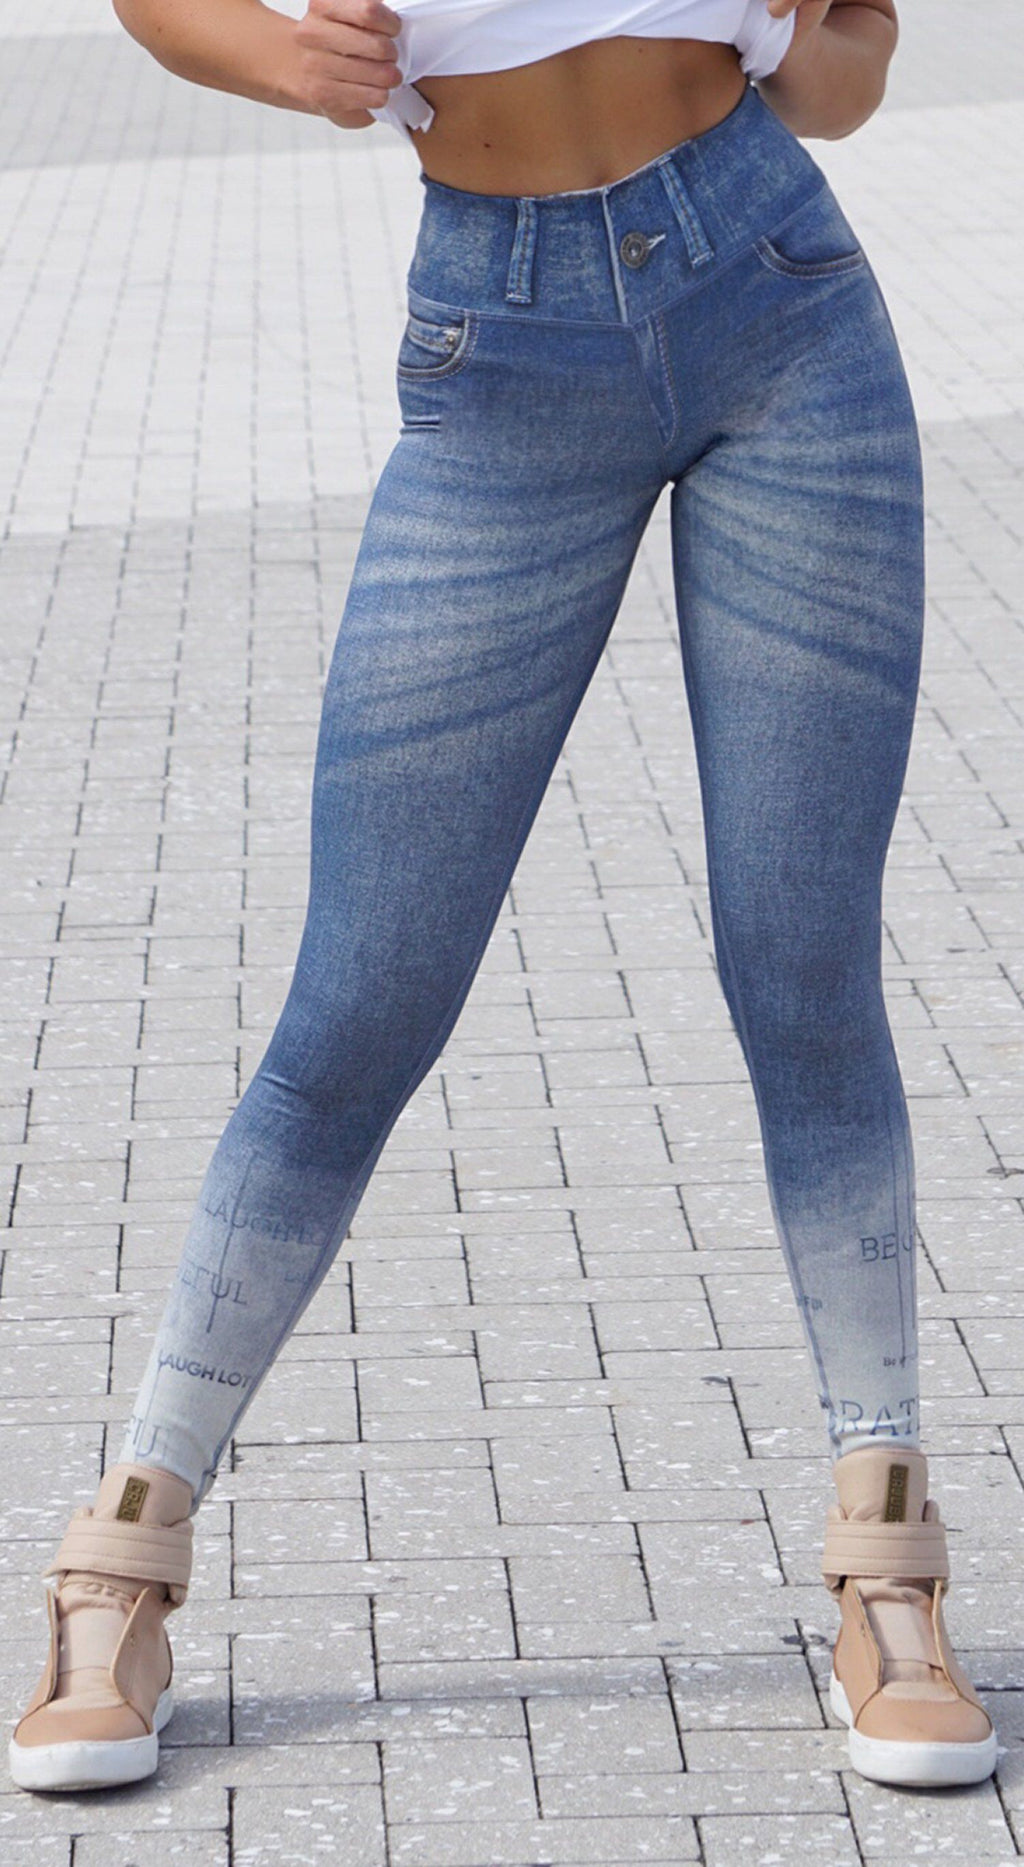 Brazilian Fake Jeans | Reversible Print | Legging Top Sublime Rio Shop Grateful